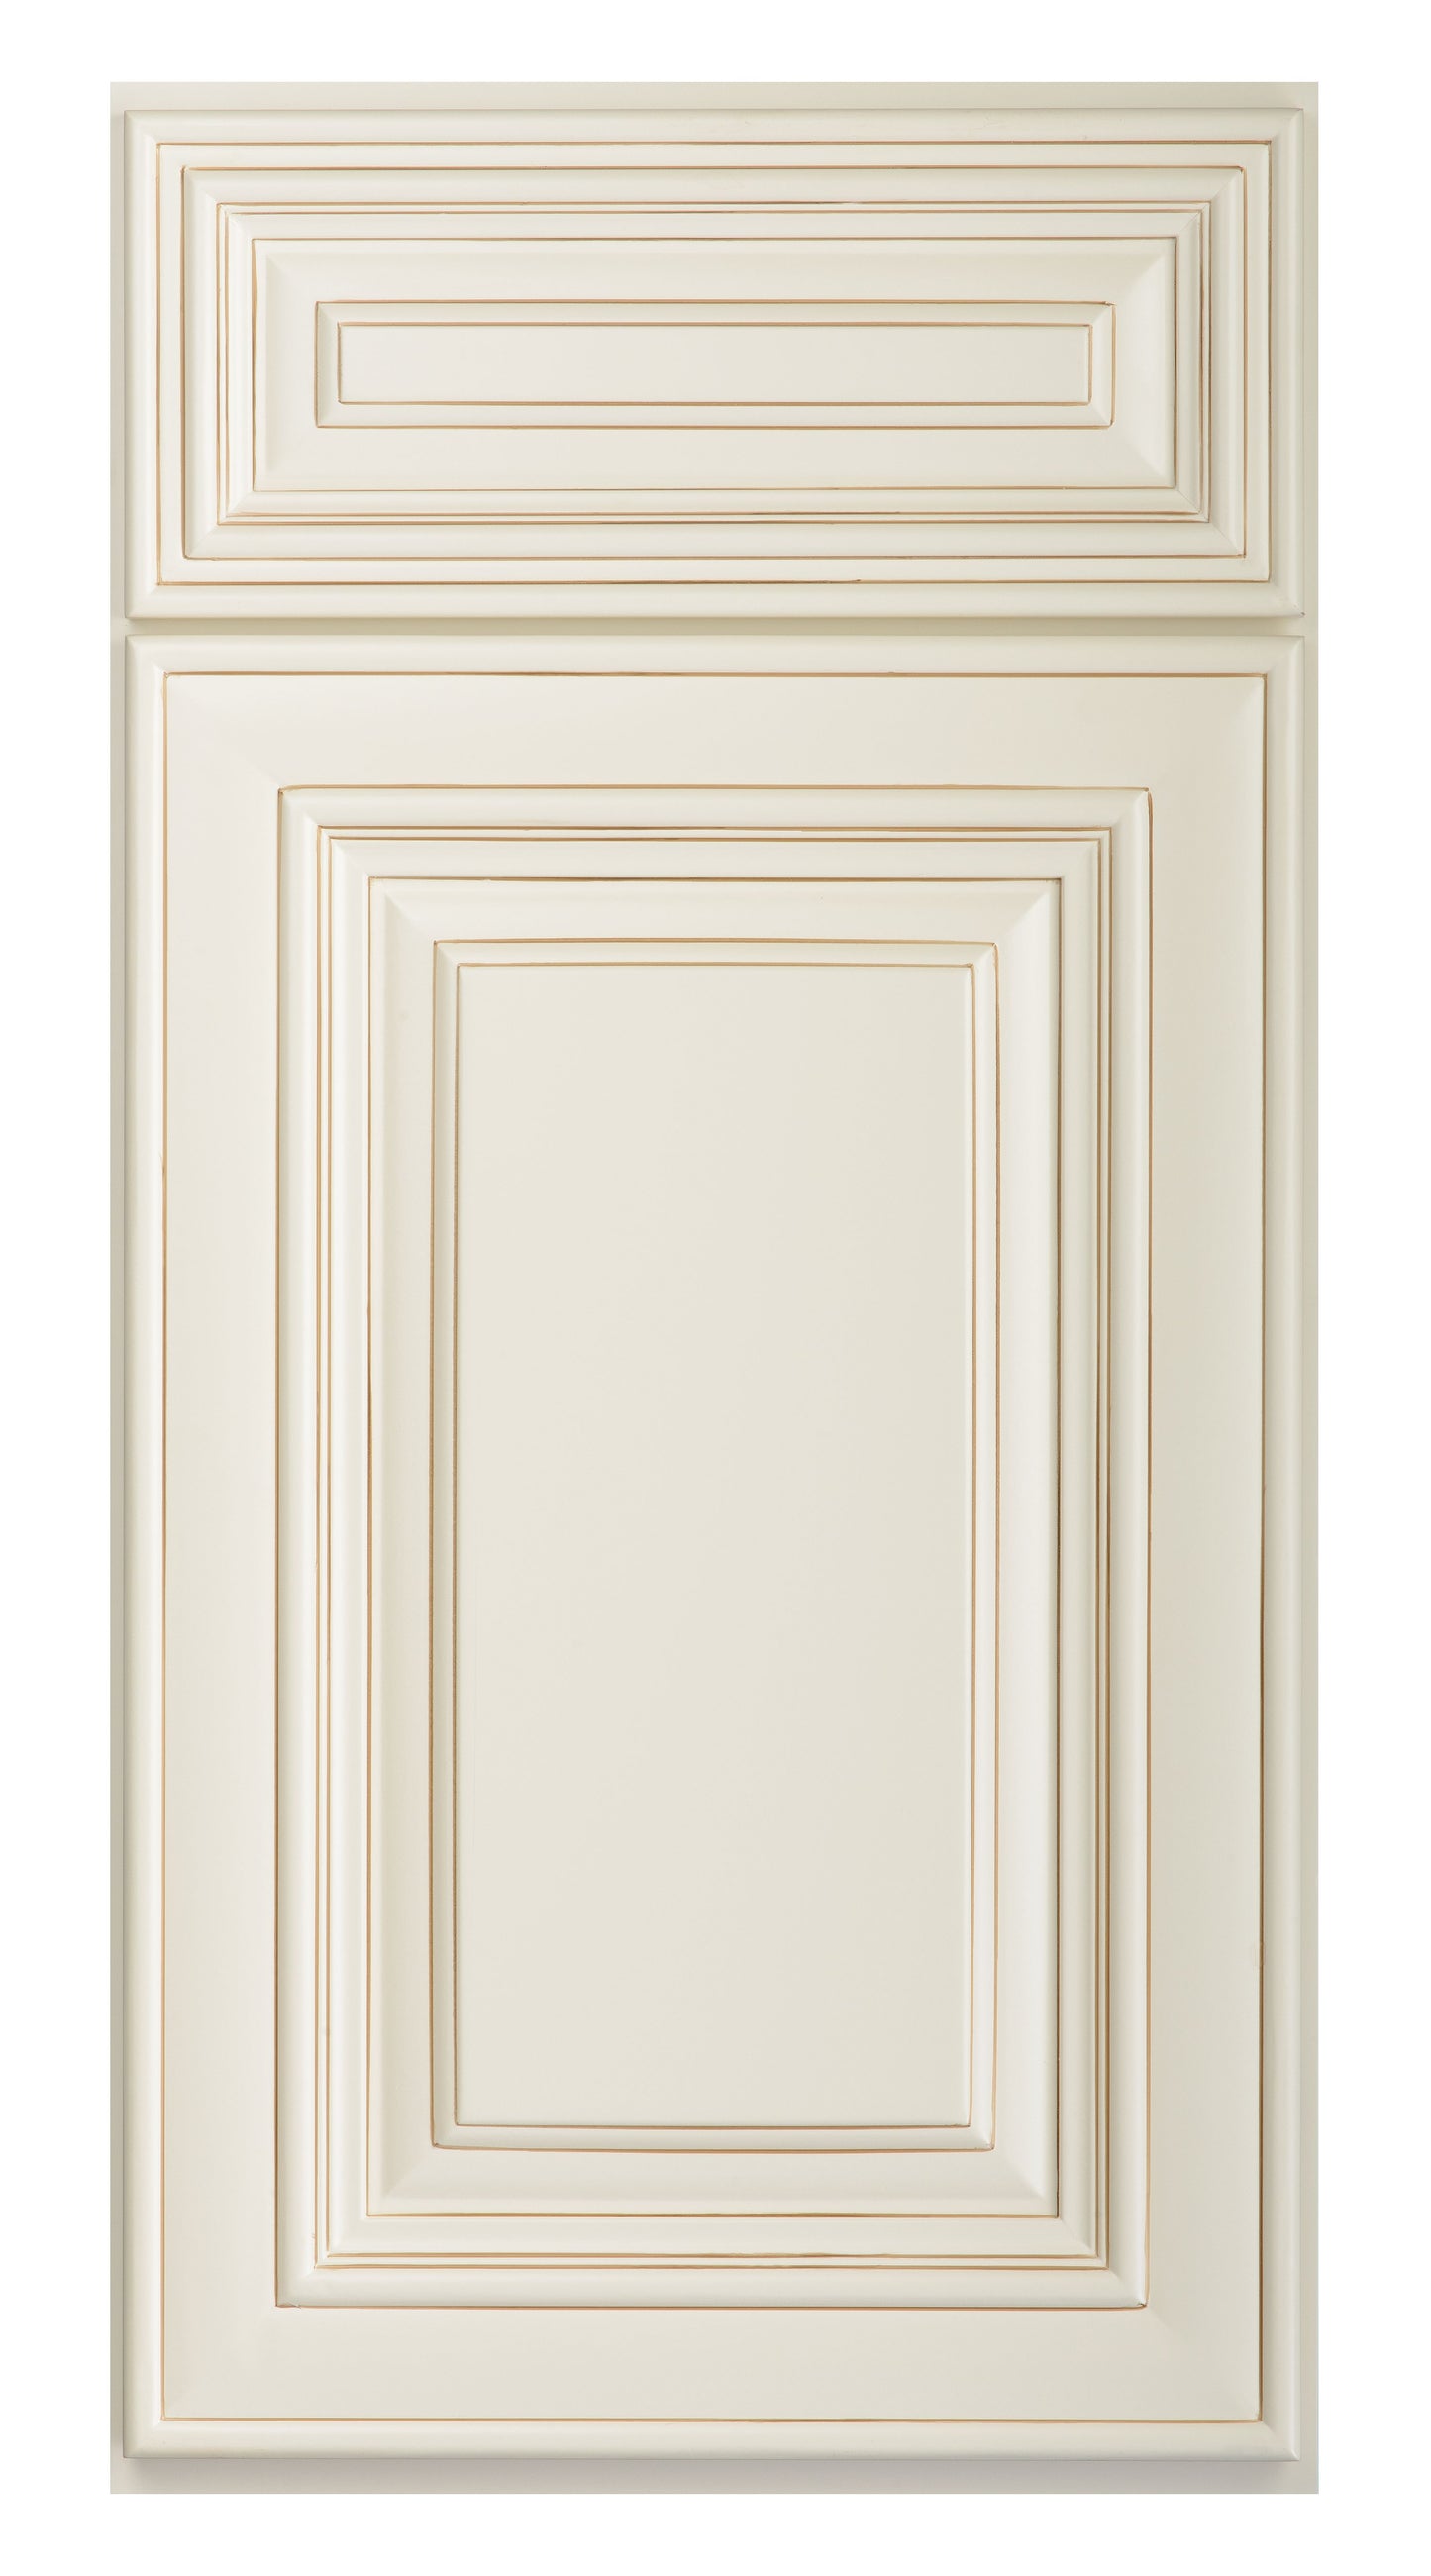 CASSELBERRY ANTIQUE WHITE SAMPLE DOOR - 11"W X 15"H X 3/4"D